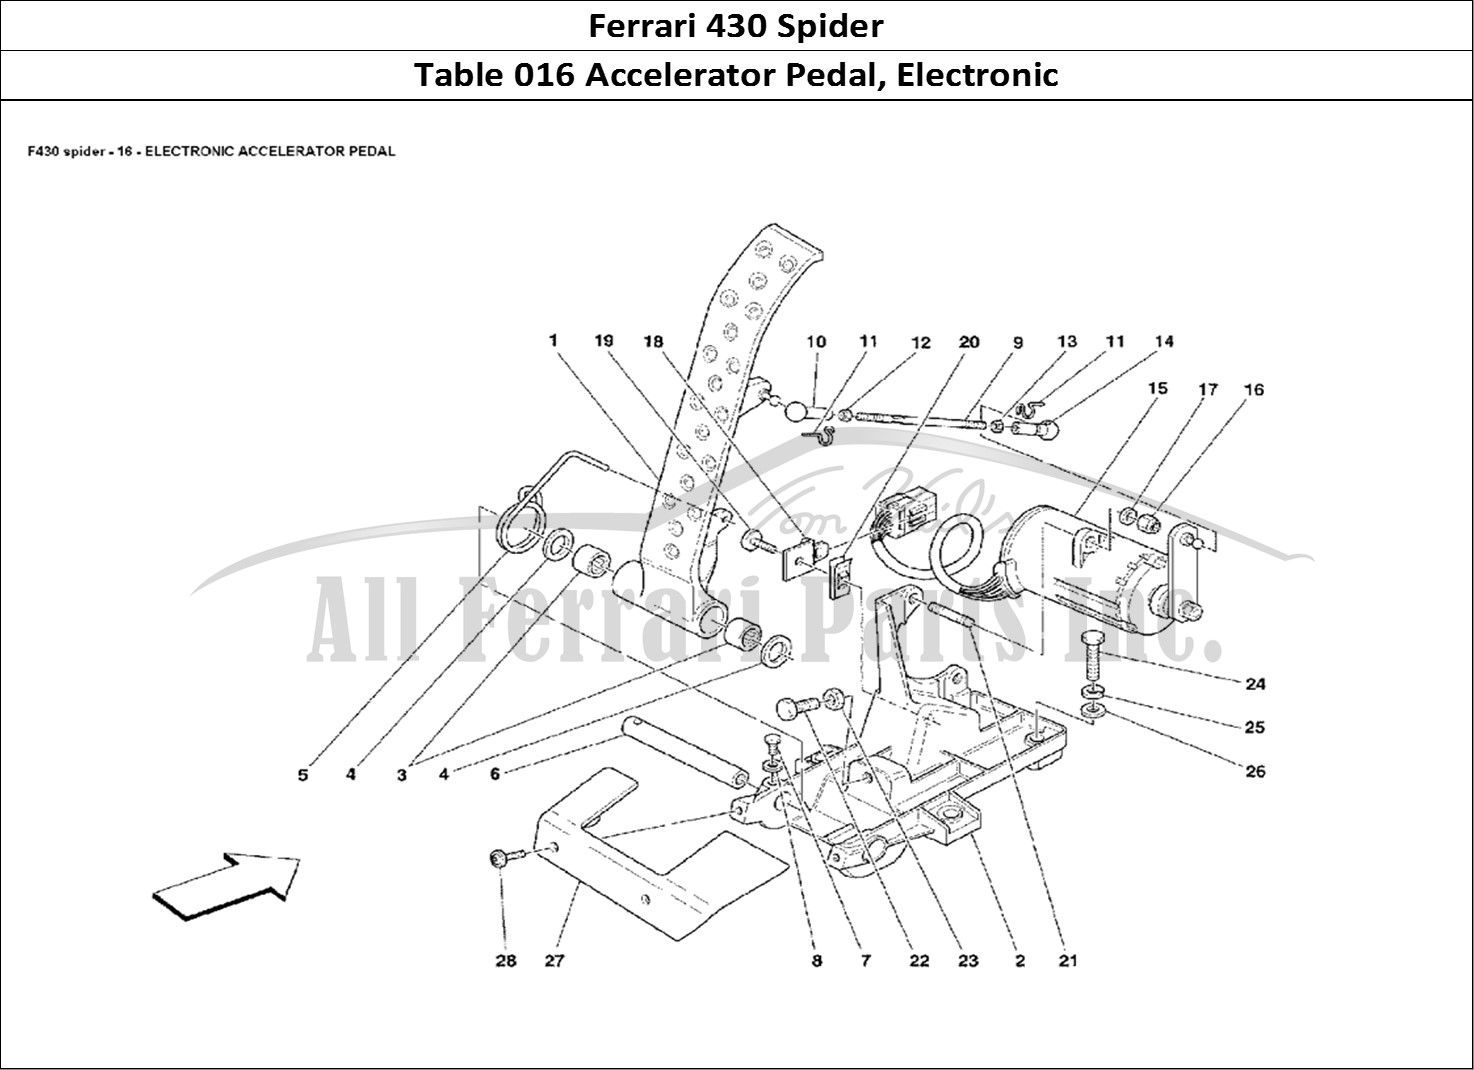 Ferrari Parts Ferrari 430 Spider Page 016 Electronic Accelerator Pe